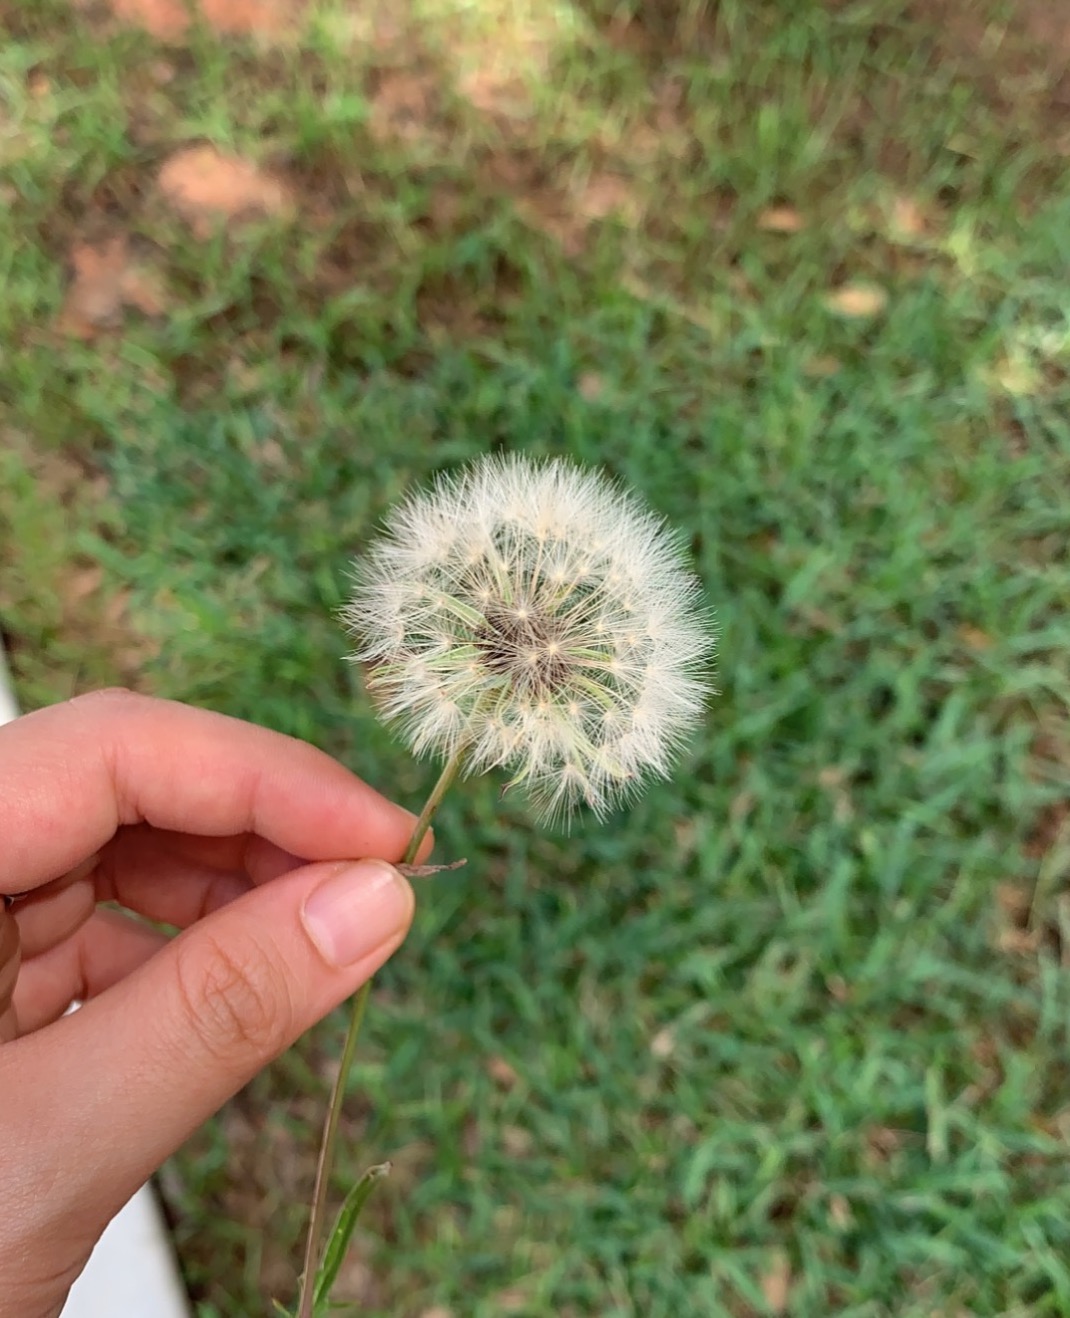 A dandelion puff. Make a wish!